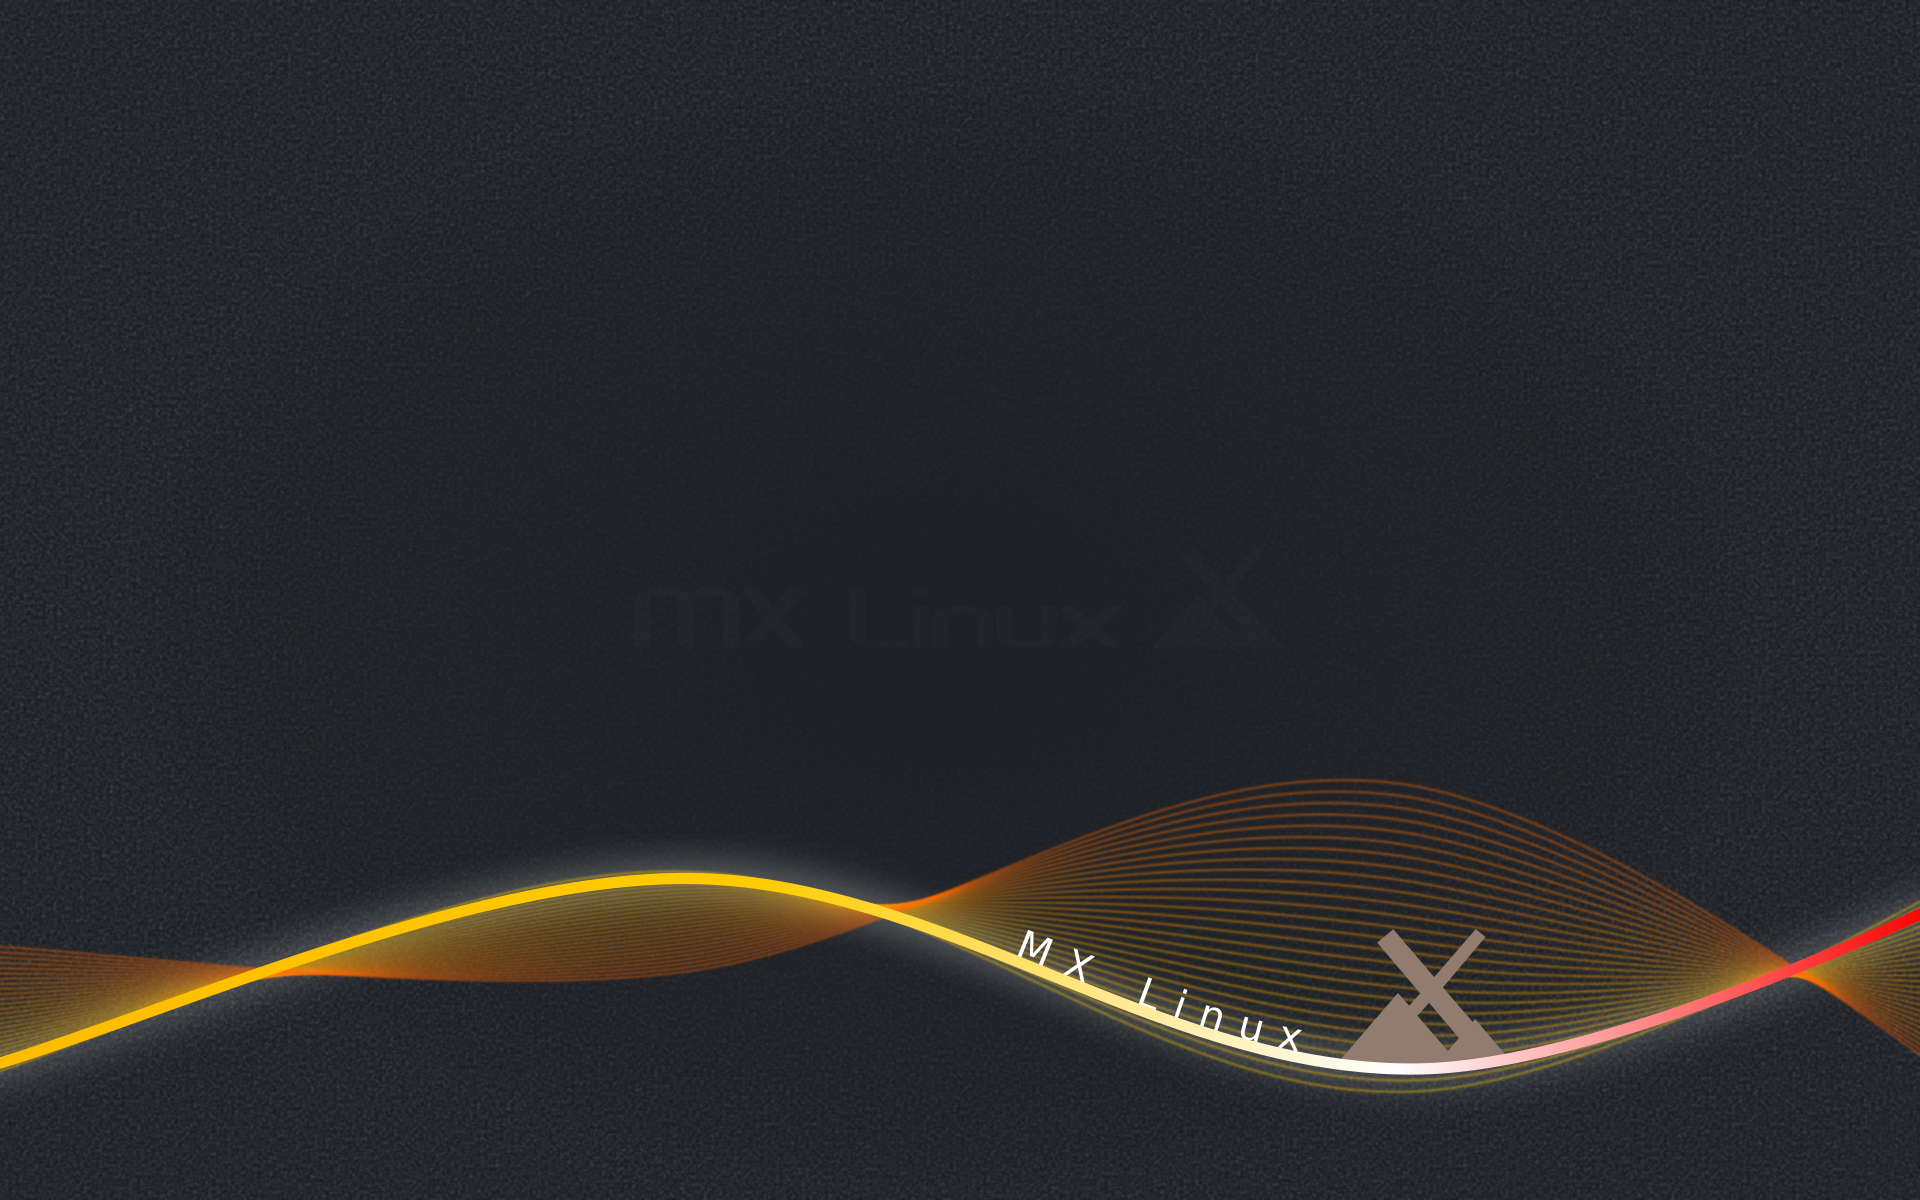 MX Linux Wallpaper Free MX Linux Background